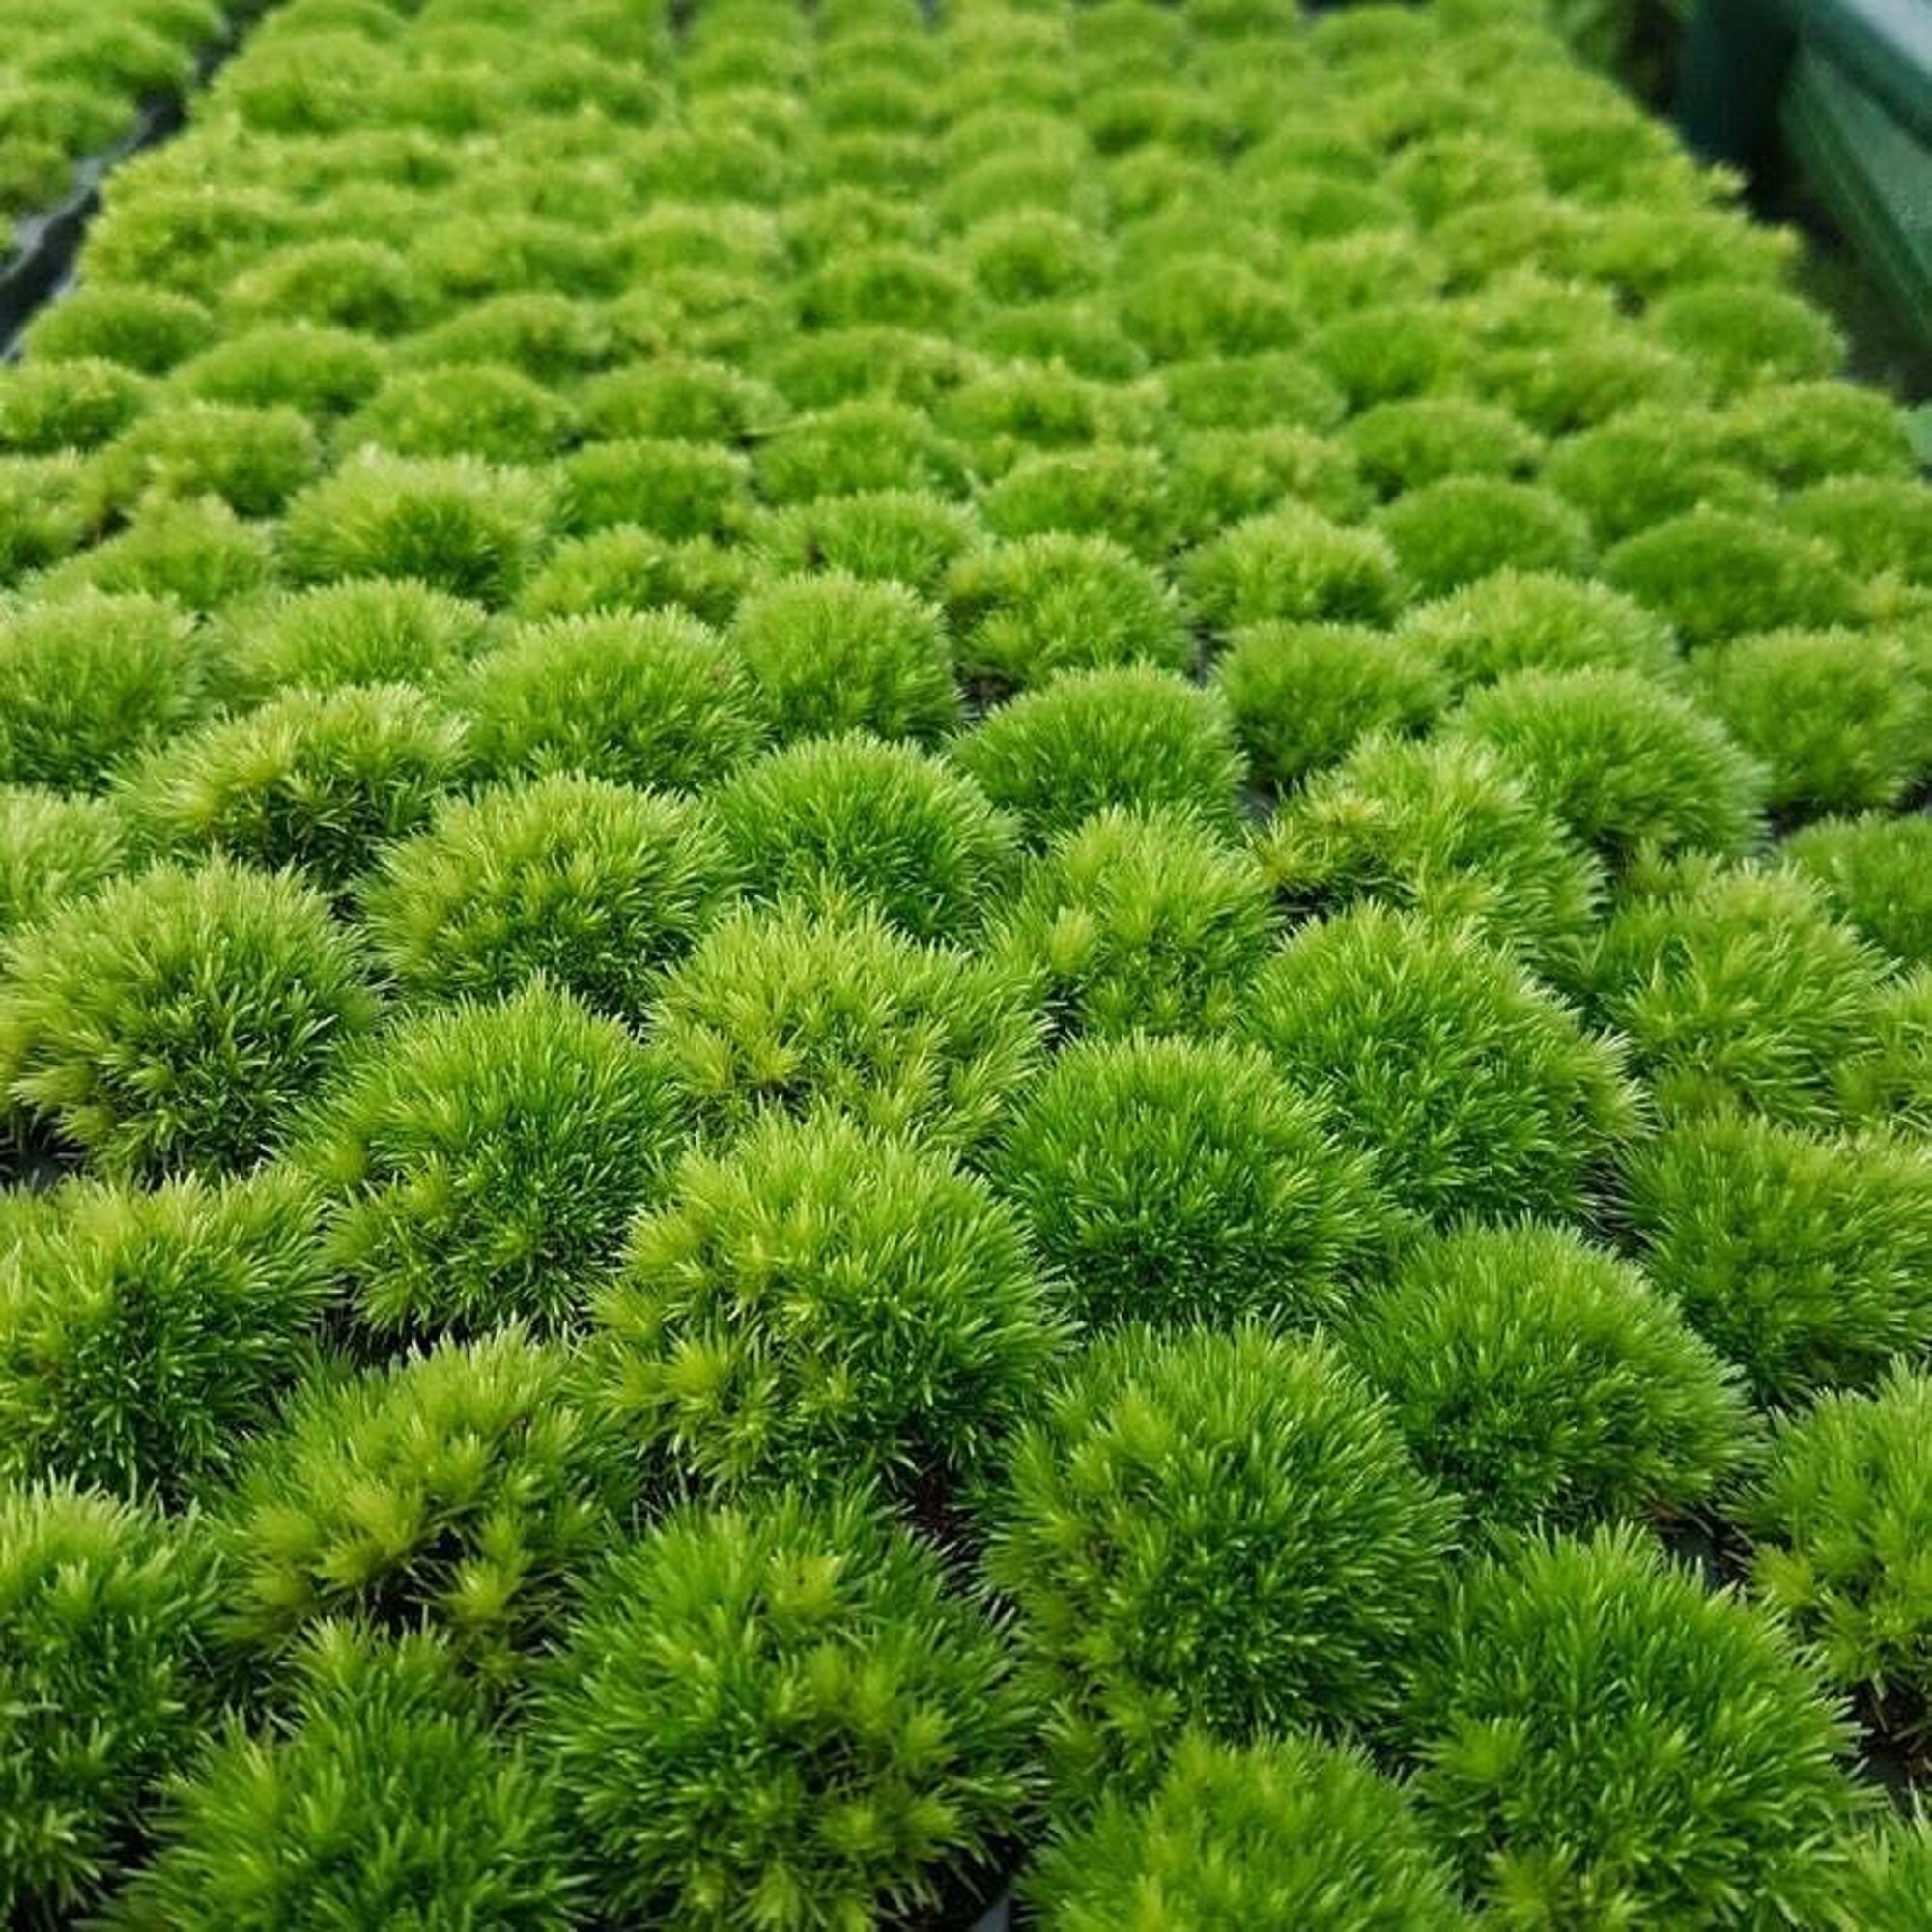 3x3 Inch Portion Of Java Moss! Live Aquarium Plants! Free S/h